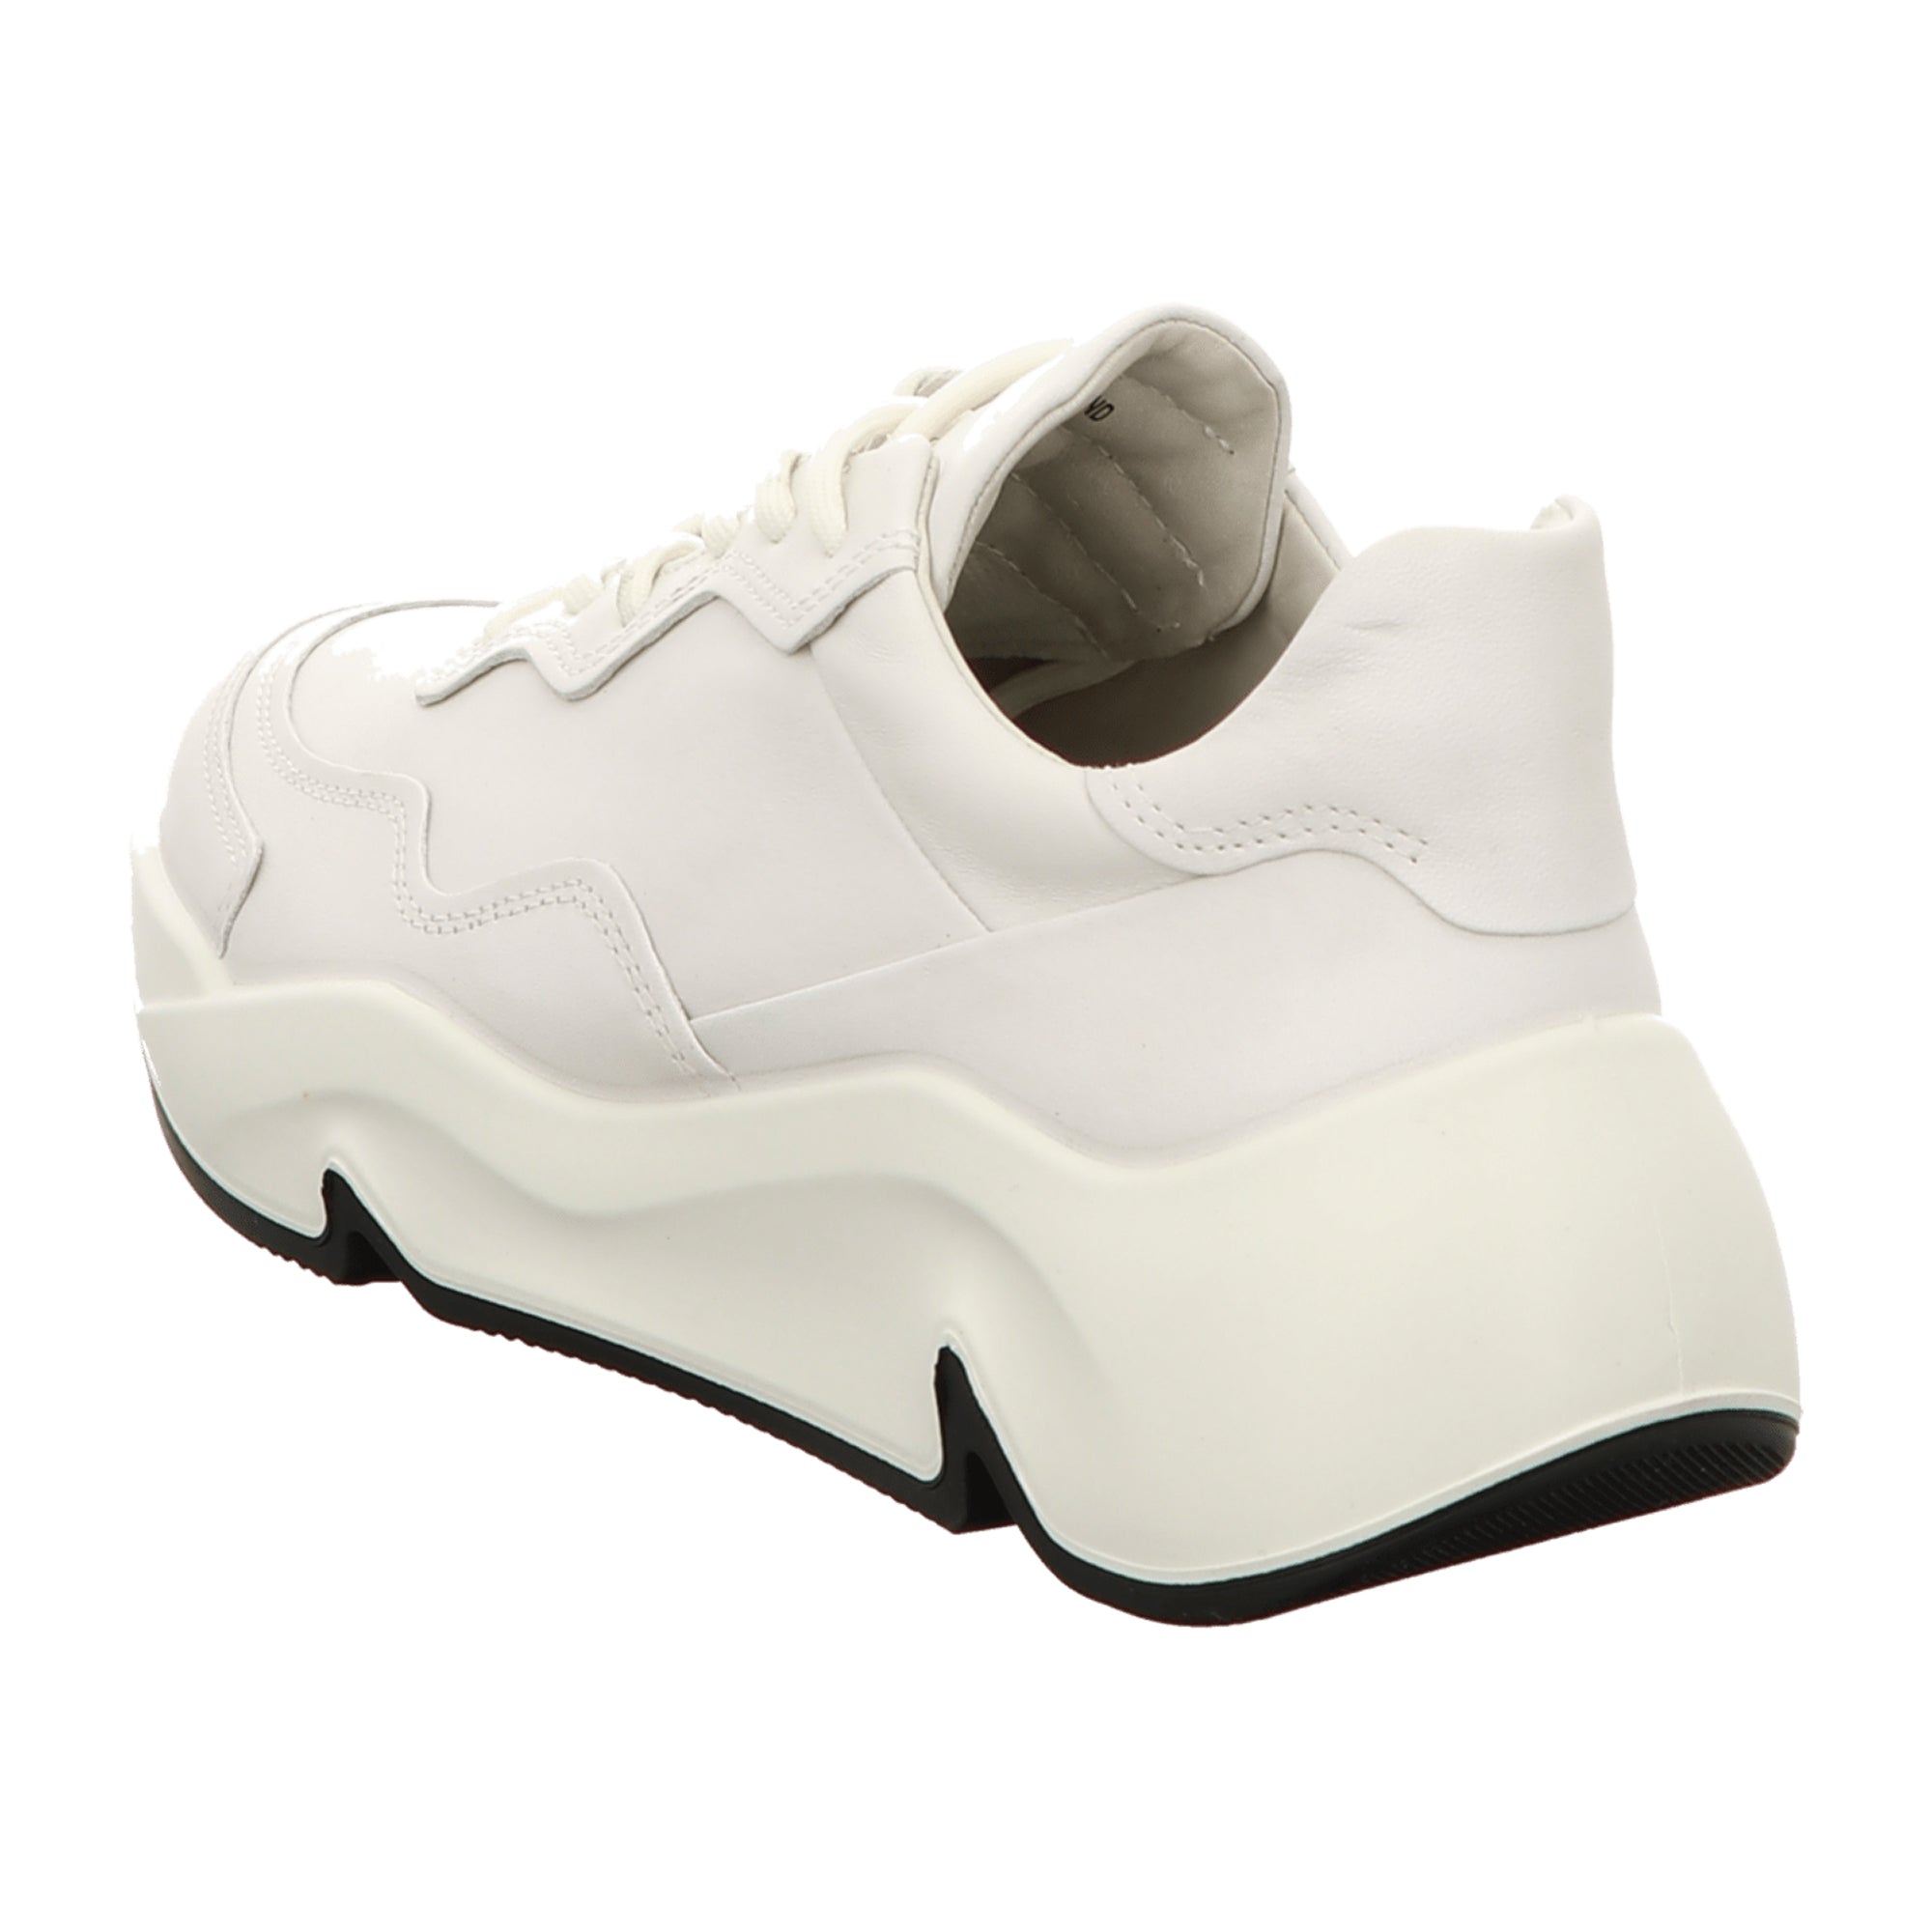 Ecco Women's Comfort Sneakers White - Stylish & Durable